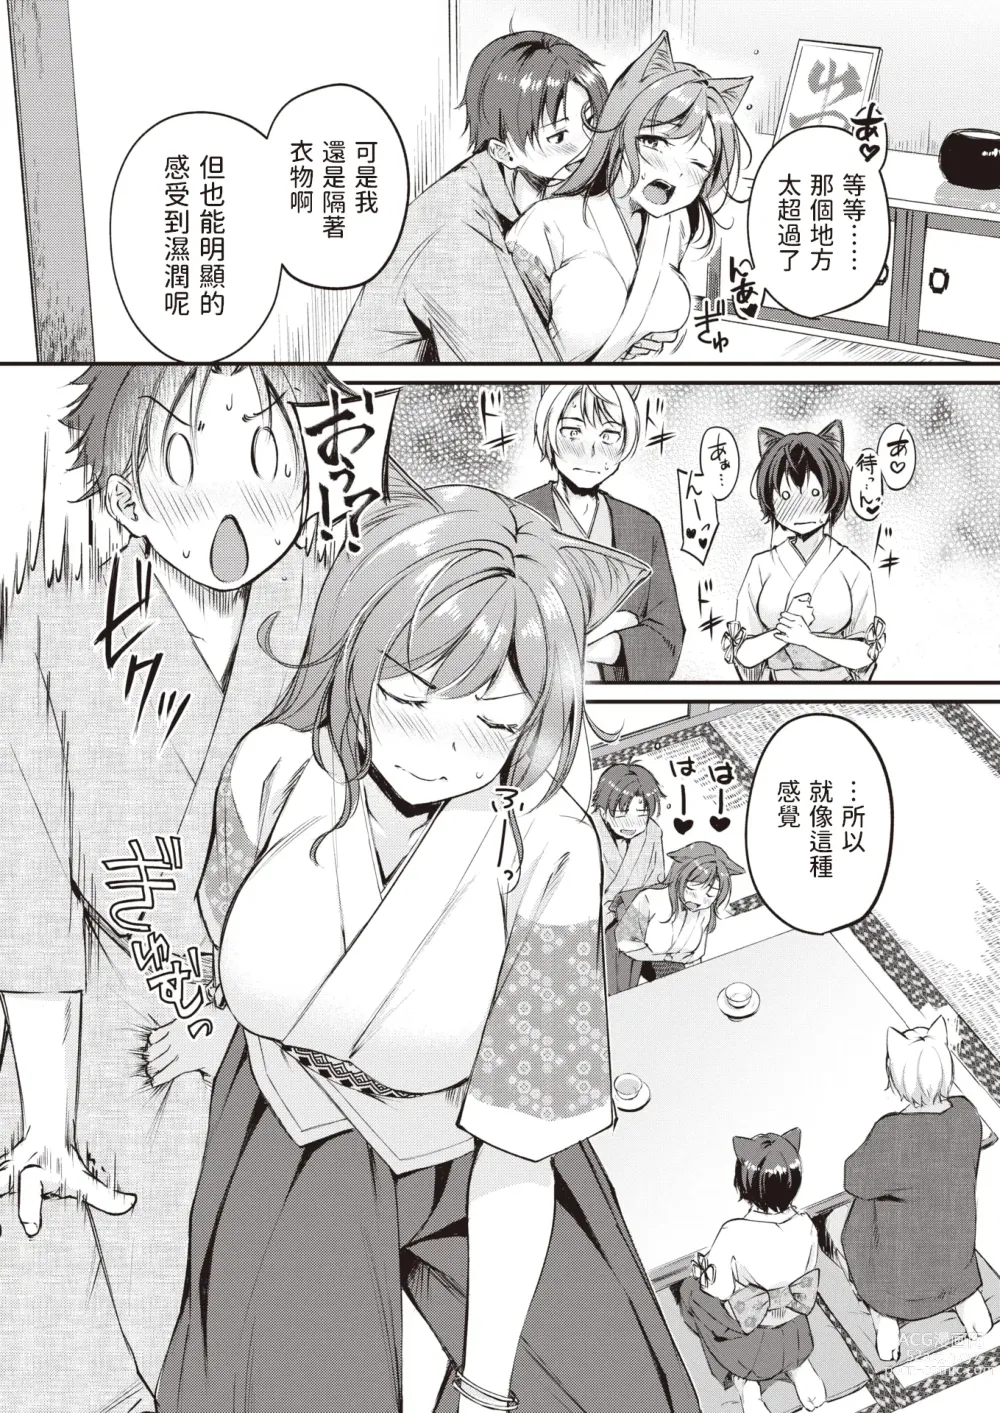 Page 12 of manga Kemomimi no Senjutsushi ~Yoko Mimi no Dendoushi~